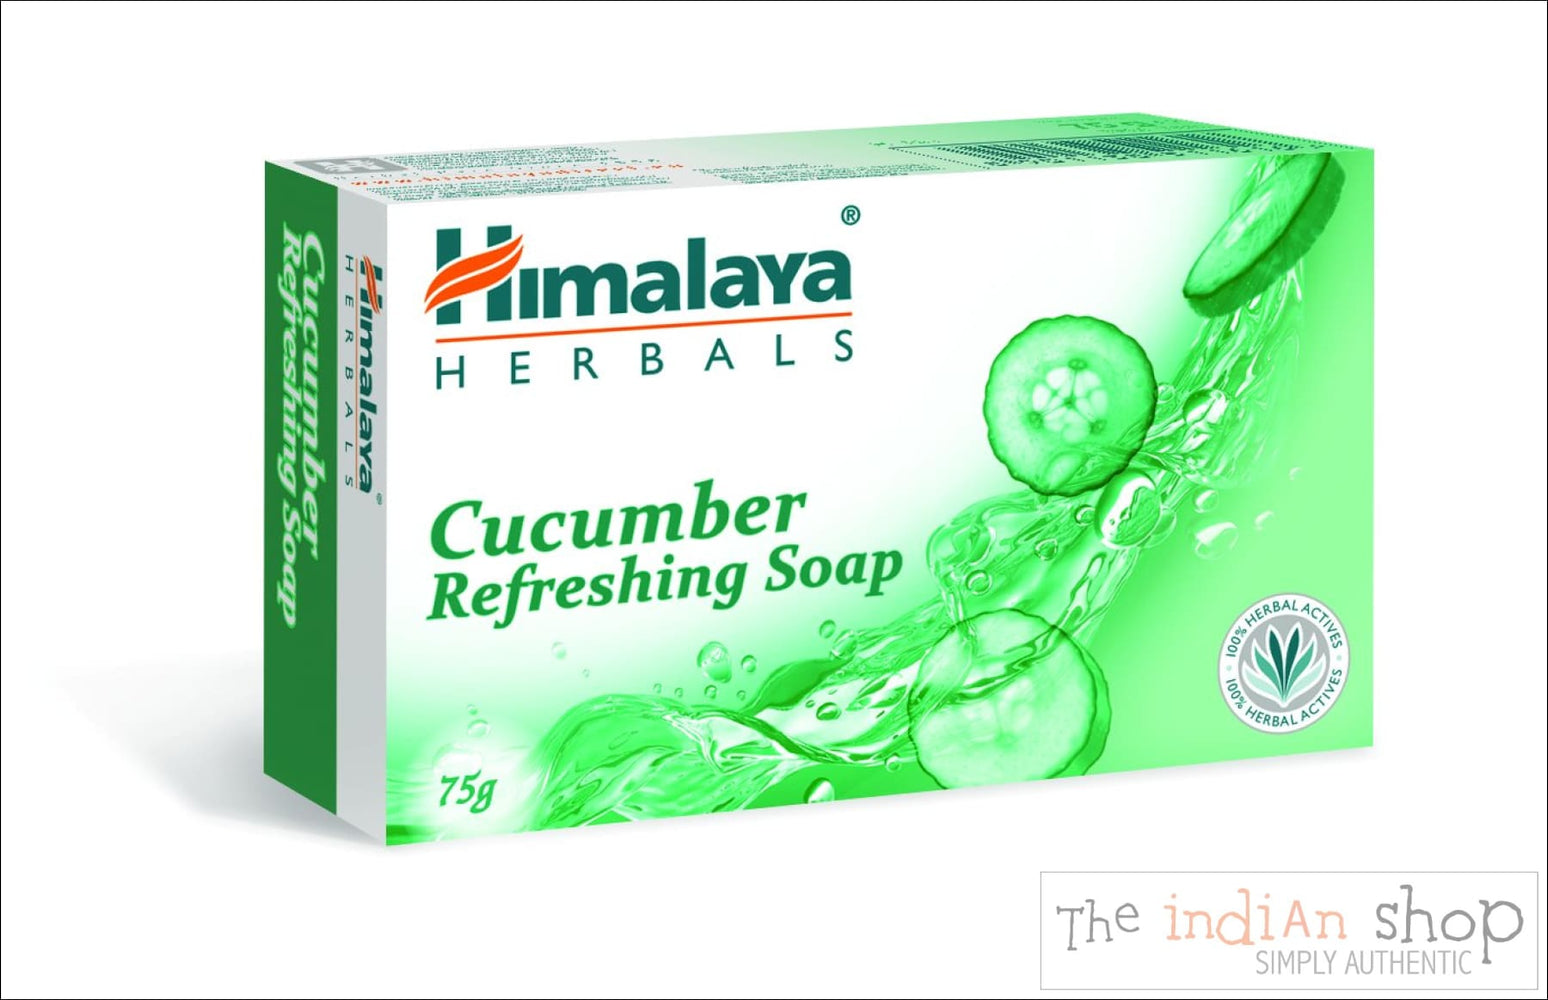 Himalaya Herbals Cucumber Refreshing Soap - Beauty and Health